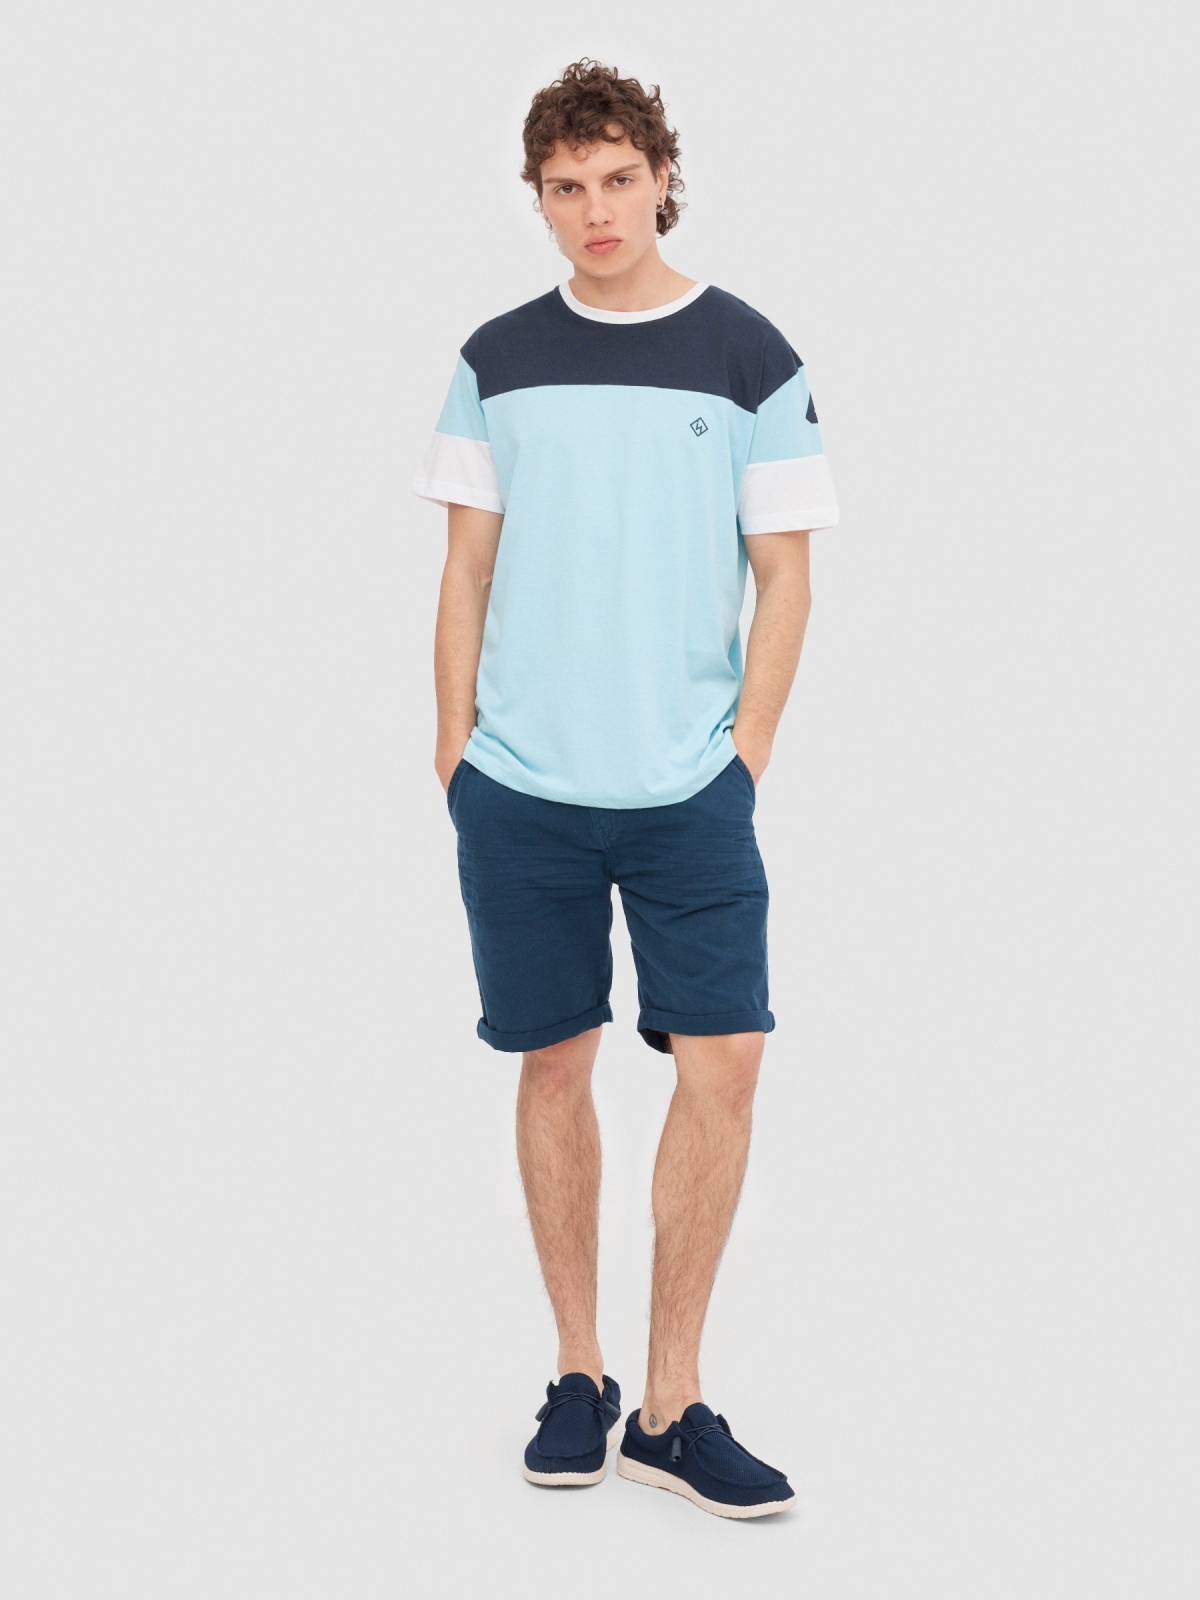 Camiseta deportiva textura azul claro vista general frontal